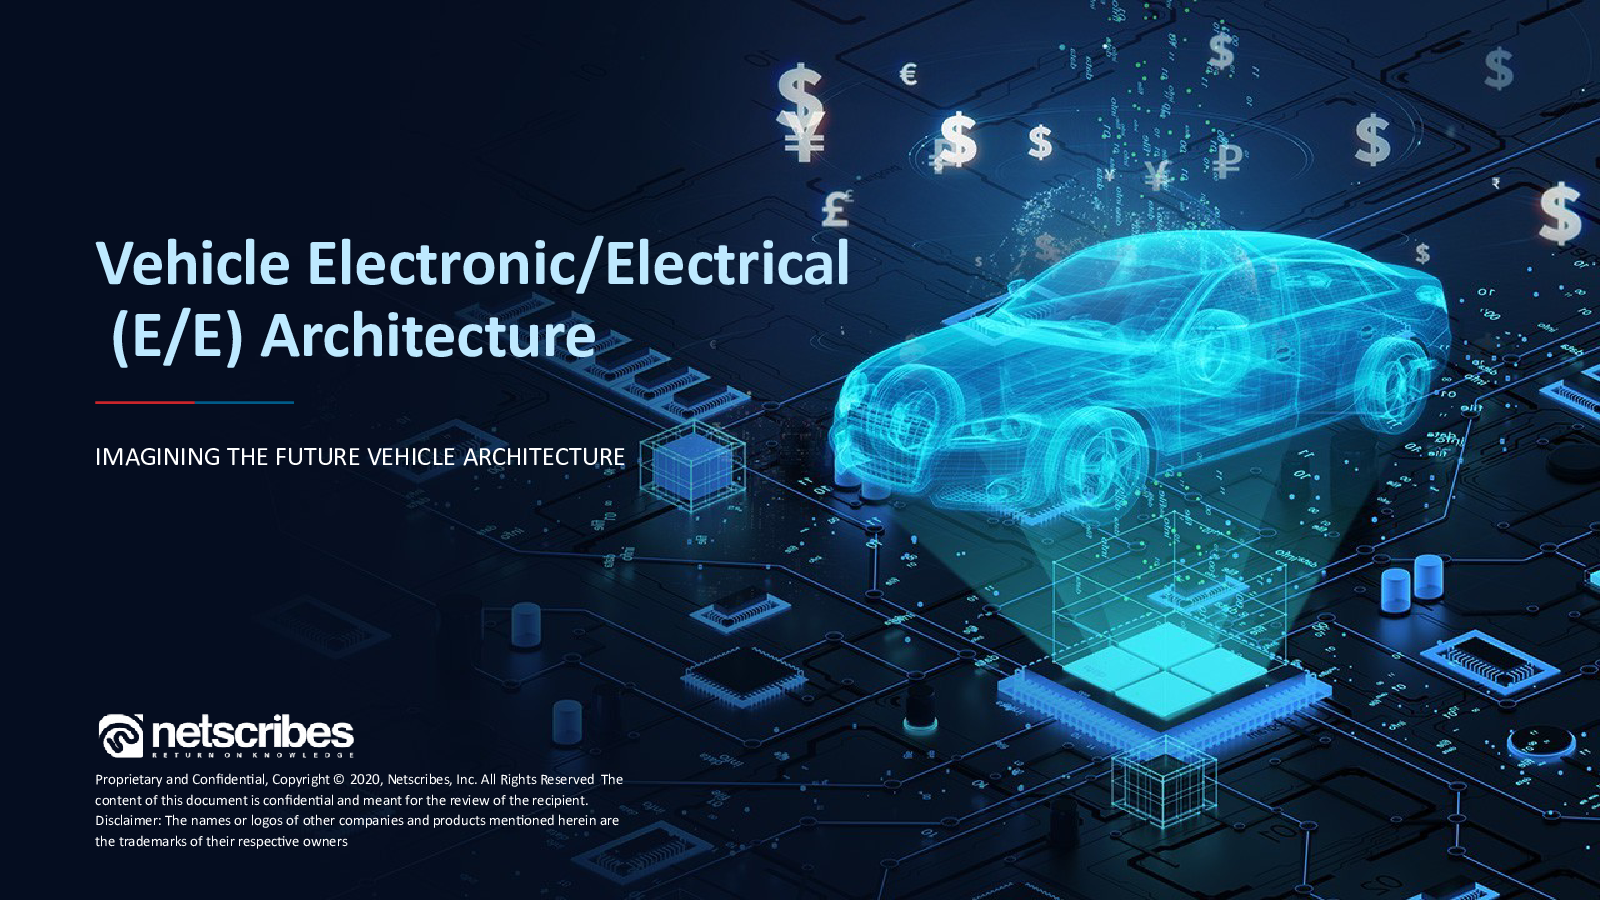 Vehicle Electronic/Electrical (E/E) Architecture IMAGINING THE FUTURE